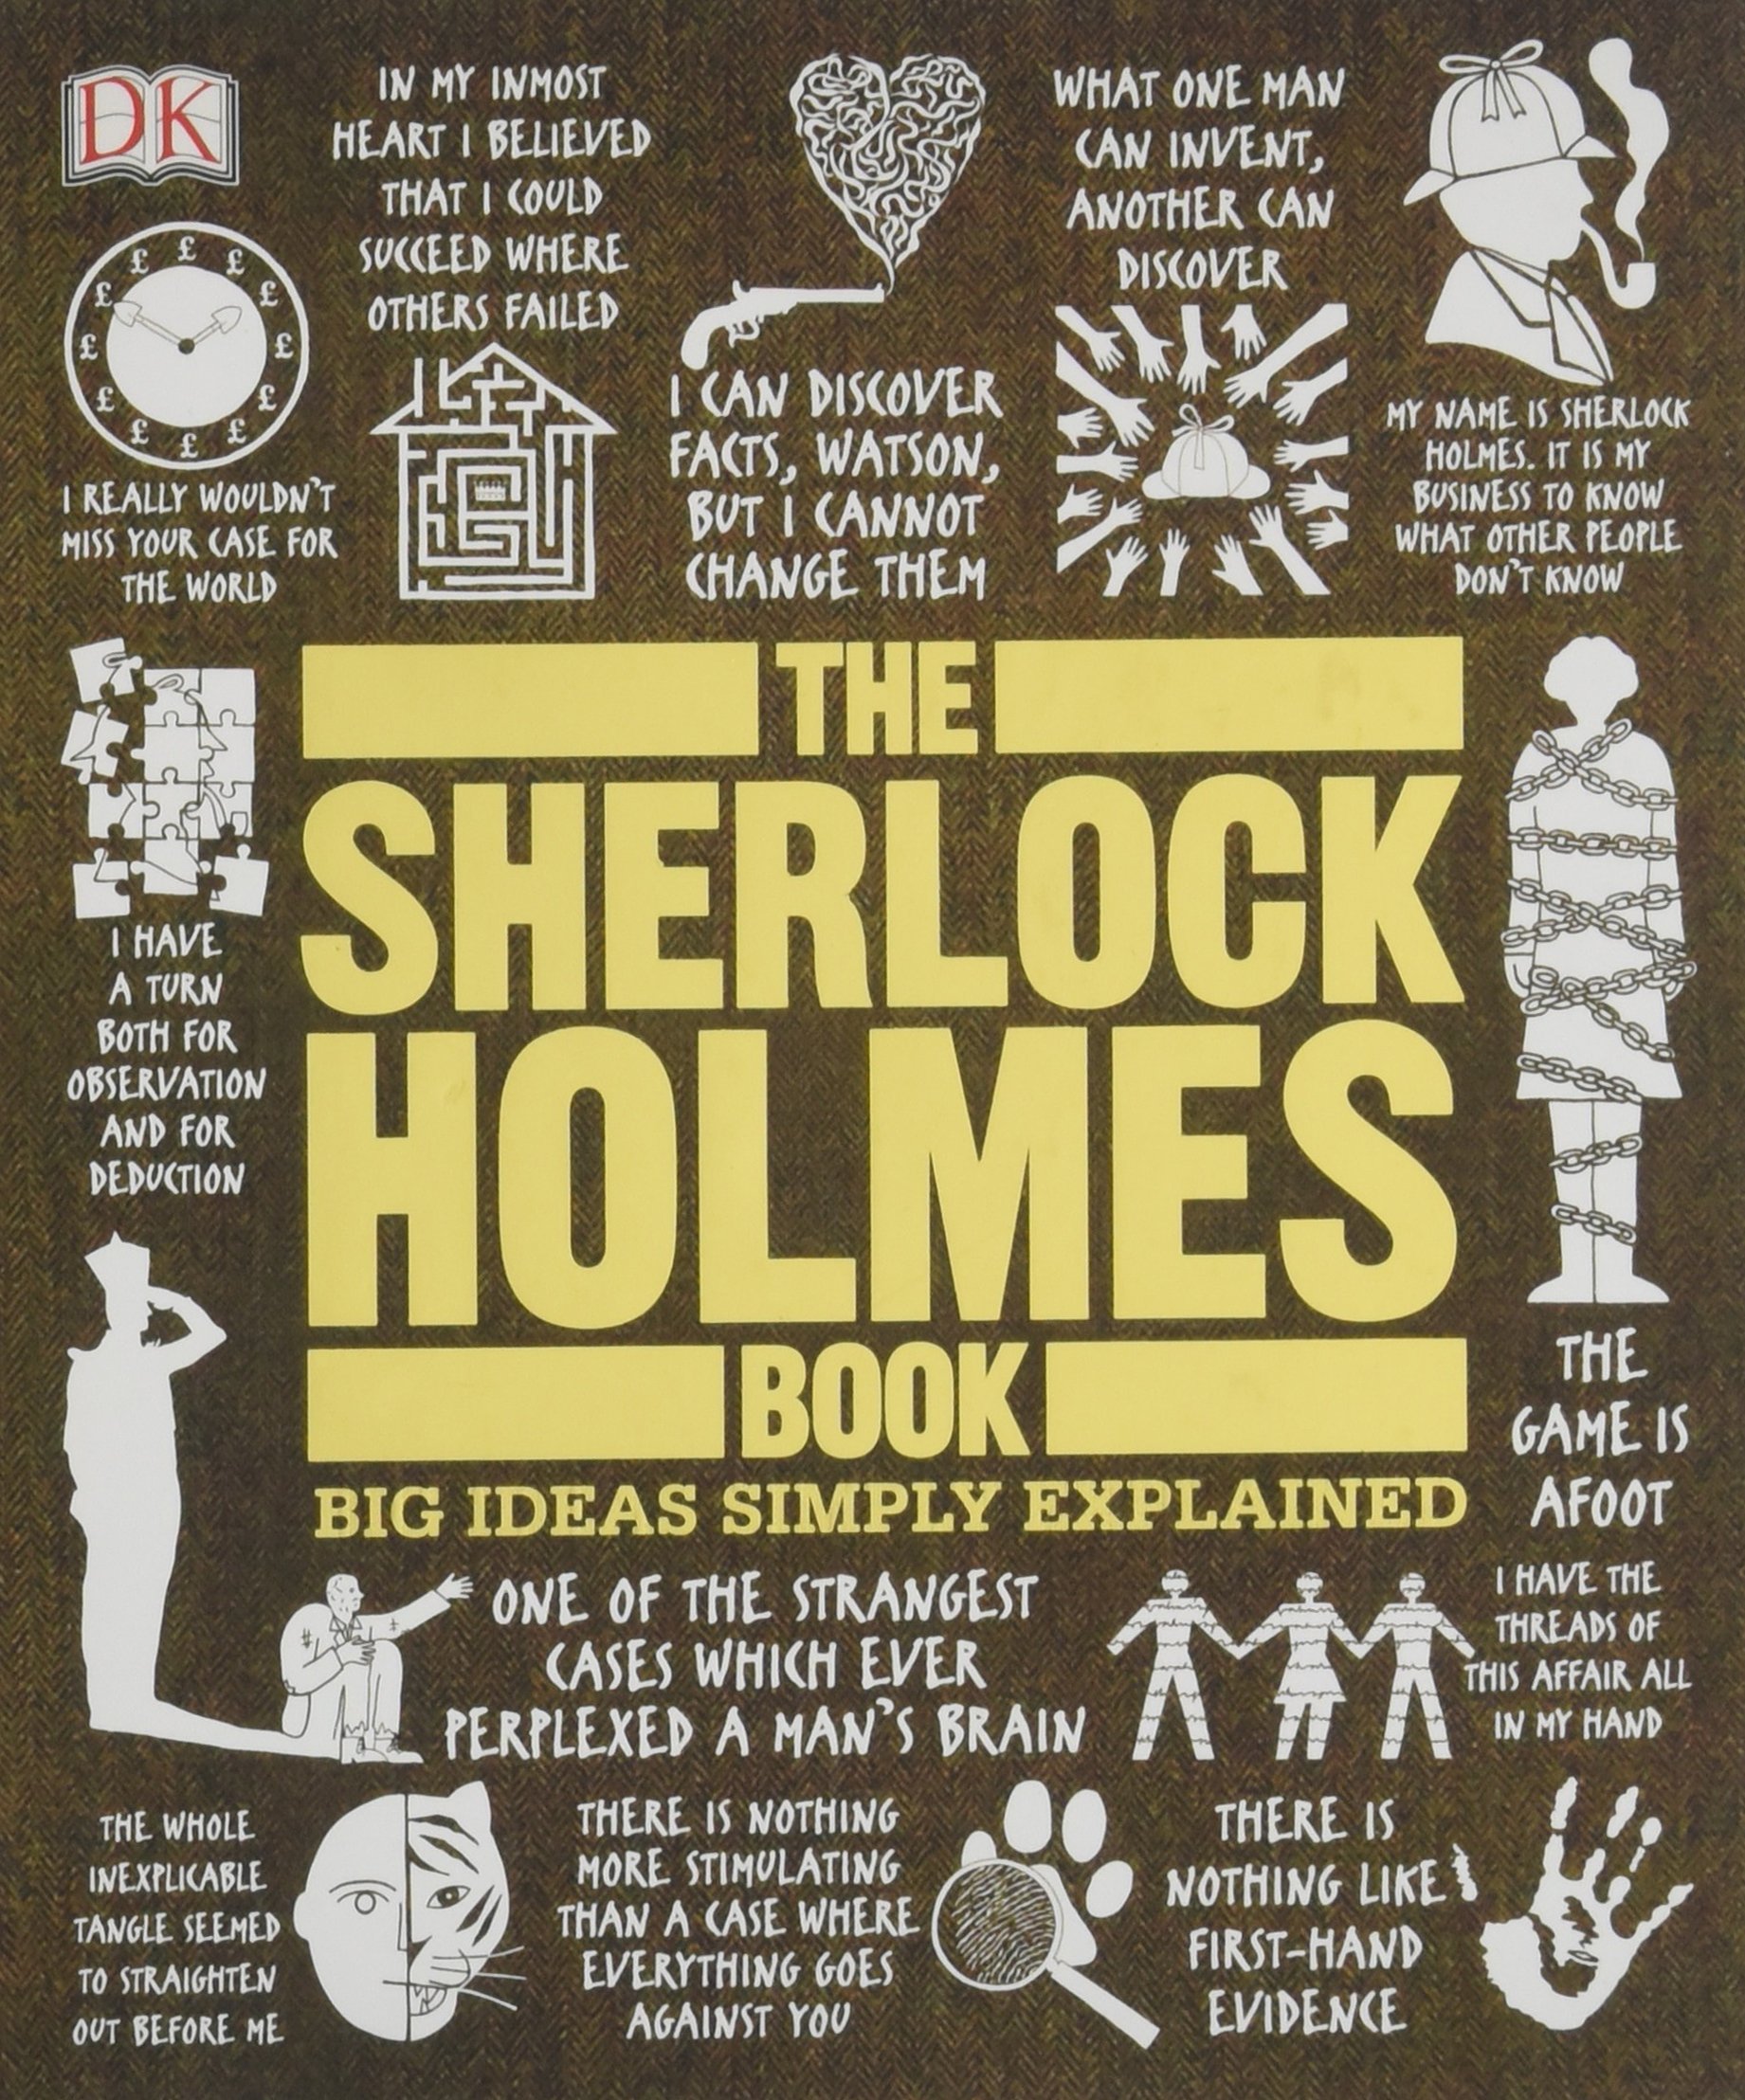 Books DK Big Ideas The Sherlock Holmes Book.jpg